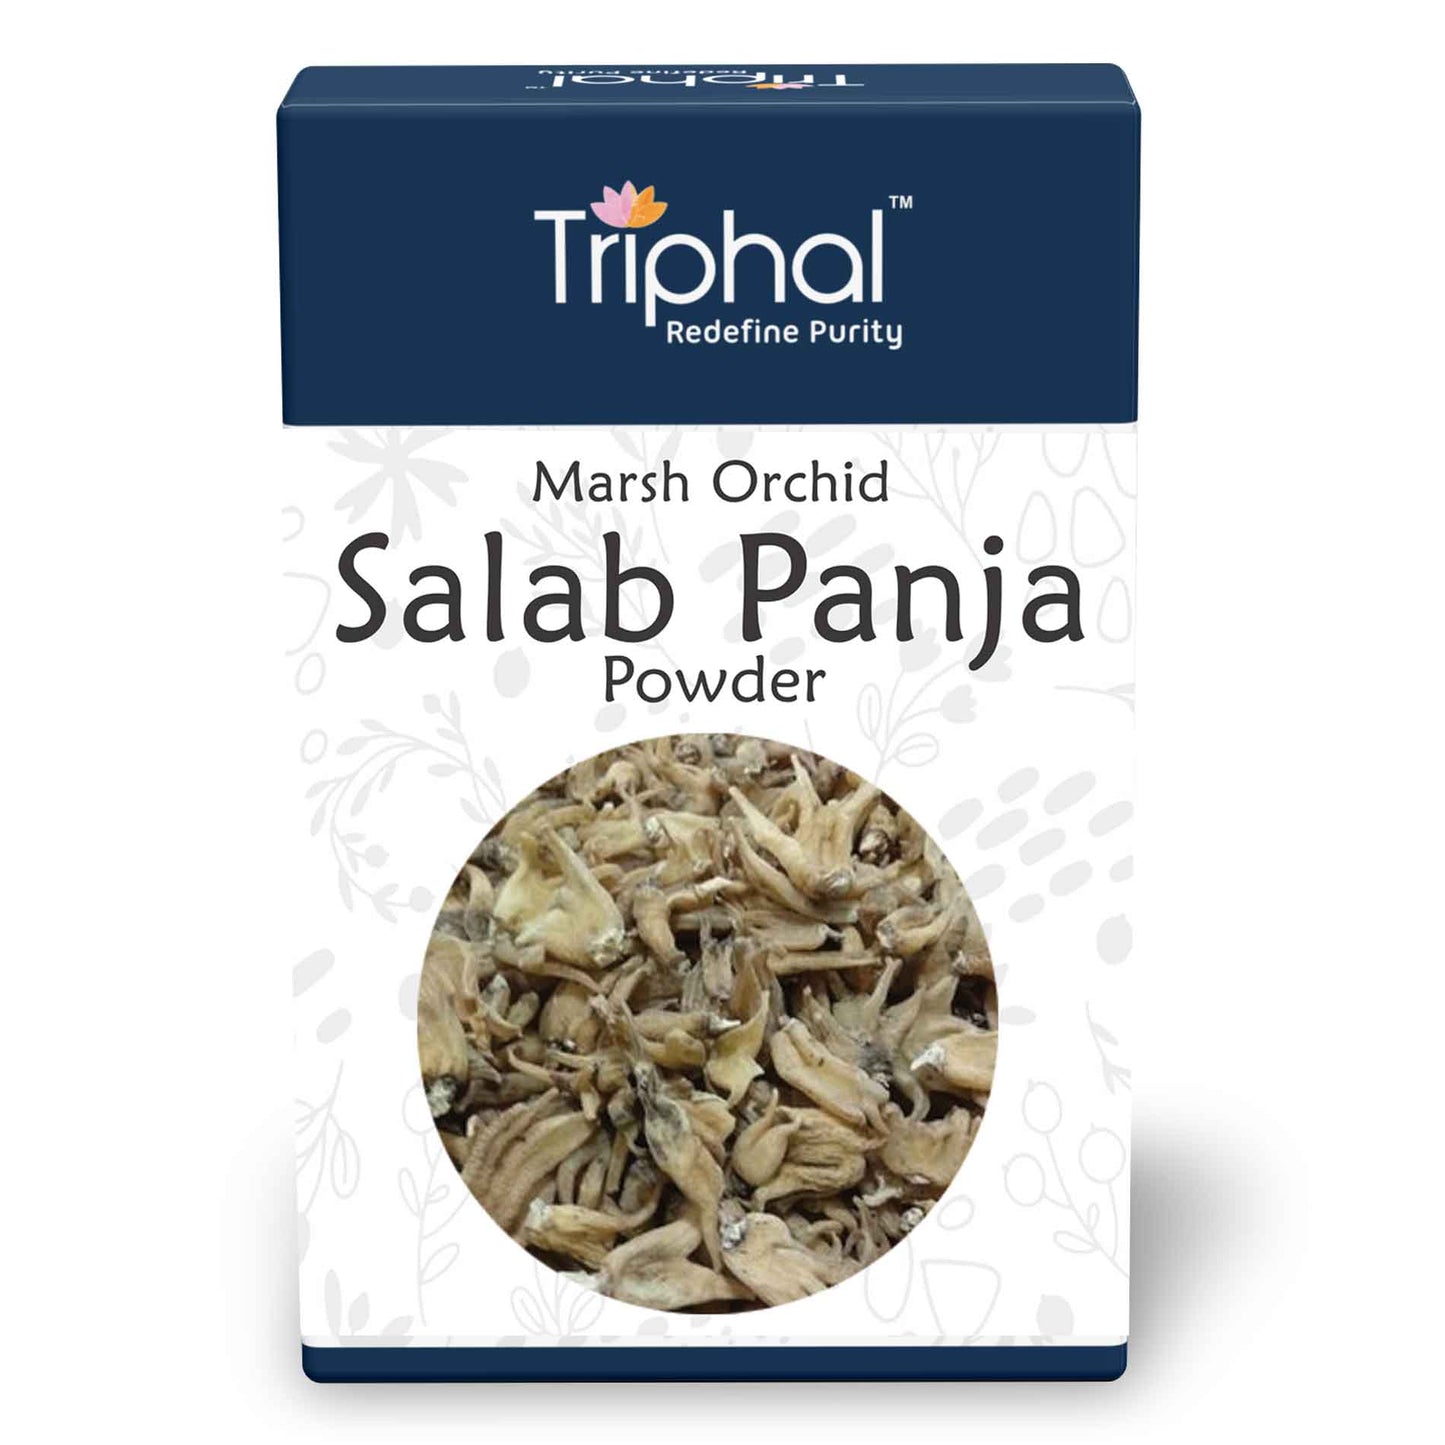 Pure Salab Punja Churn or Salam Panja Powder for overall wellbeing